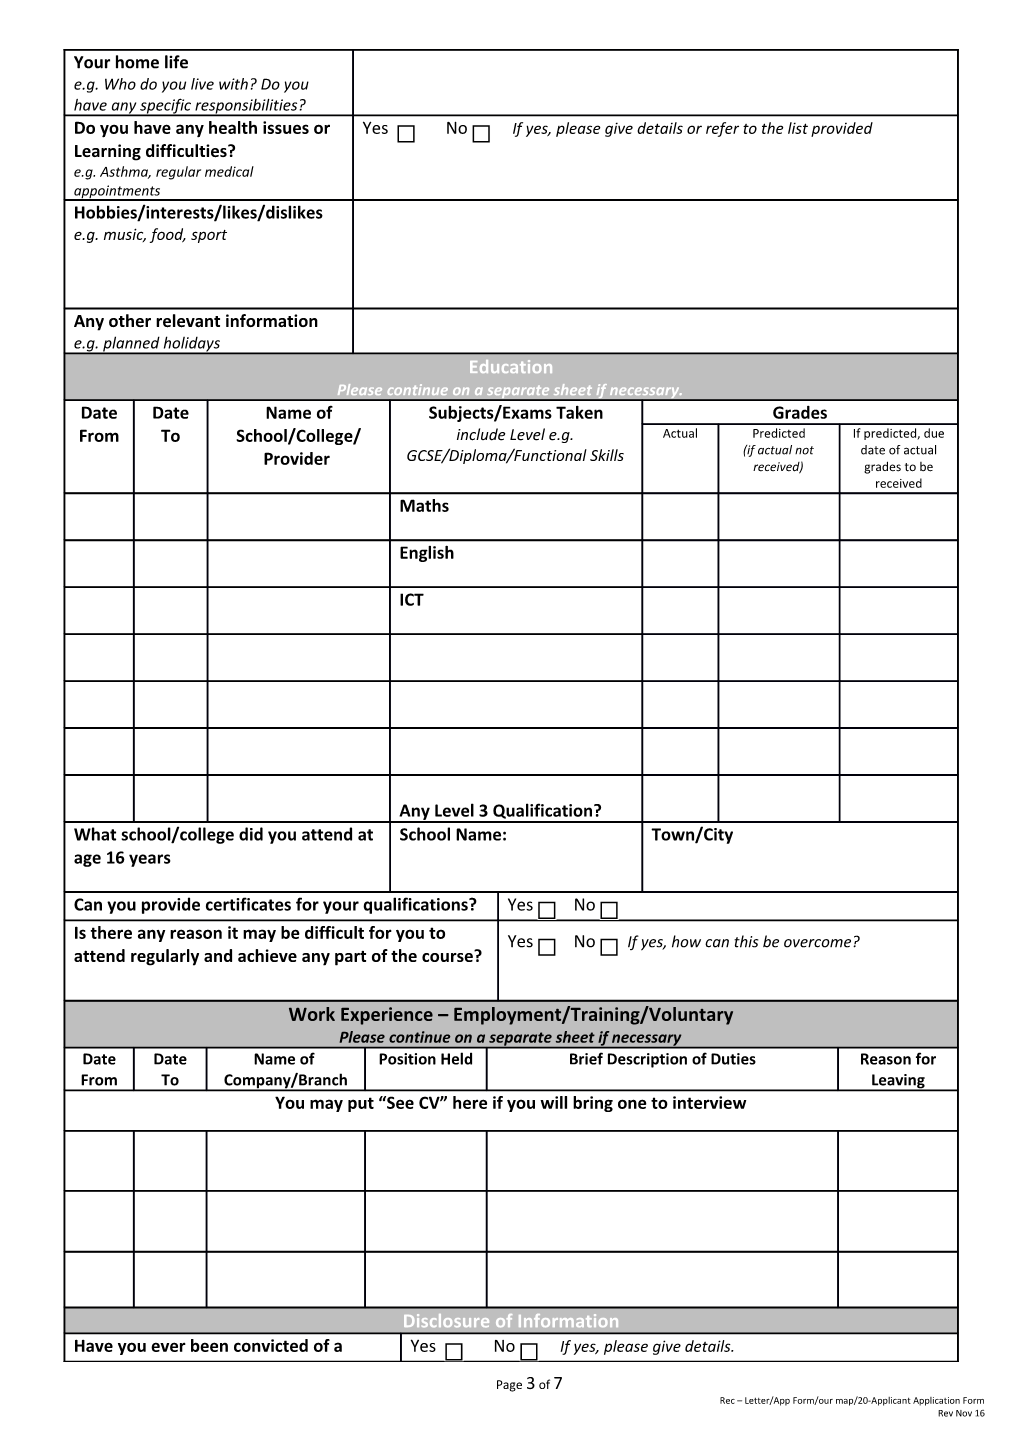 Rec Letter/App Form/Our Map/20-Applicant Application Form